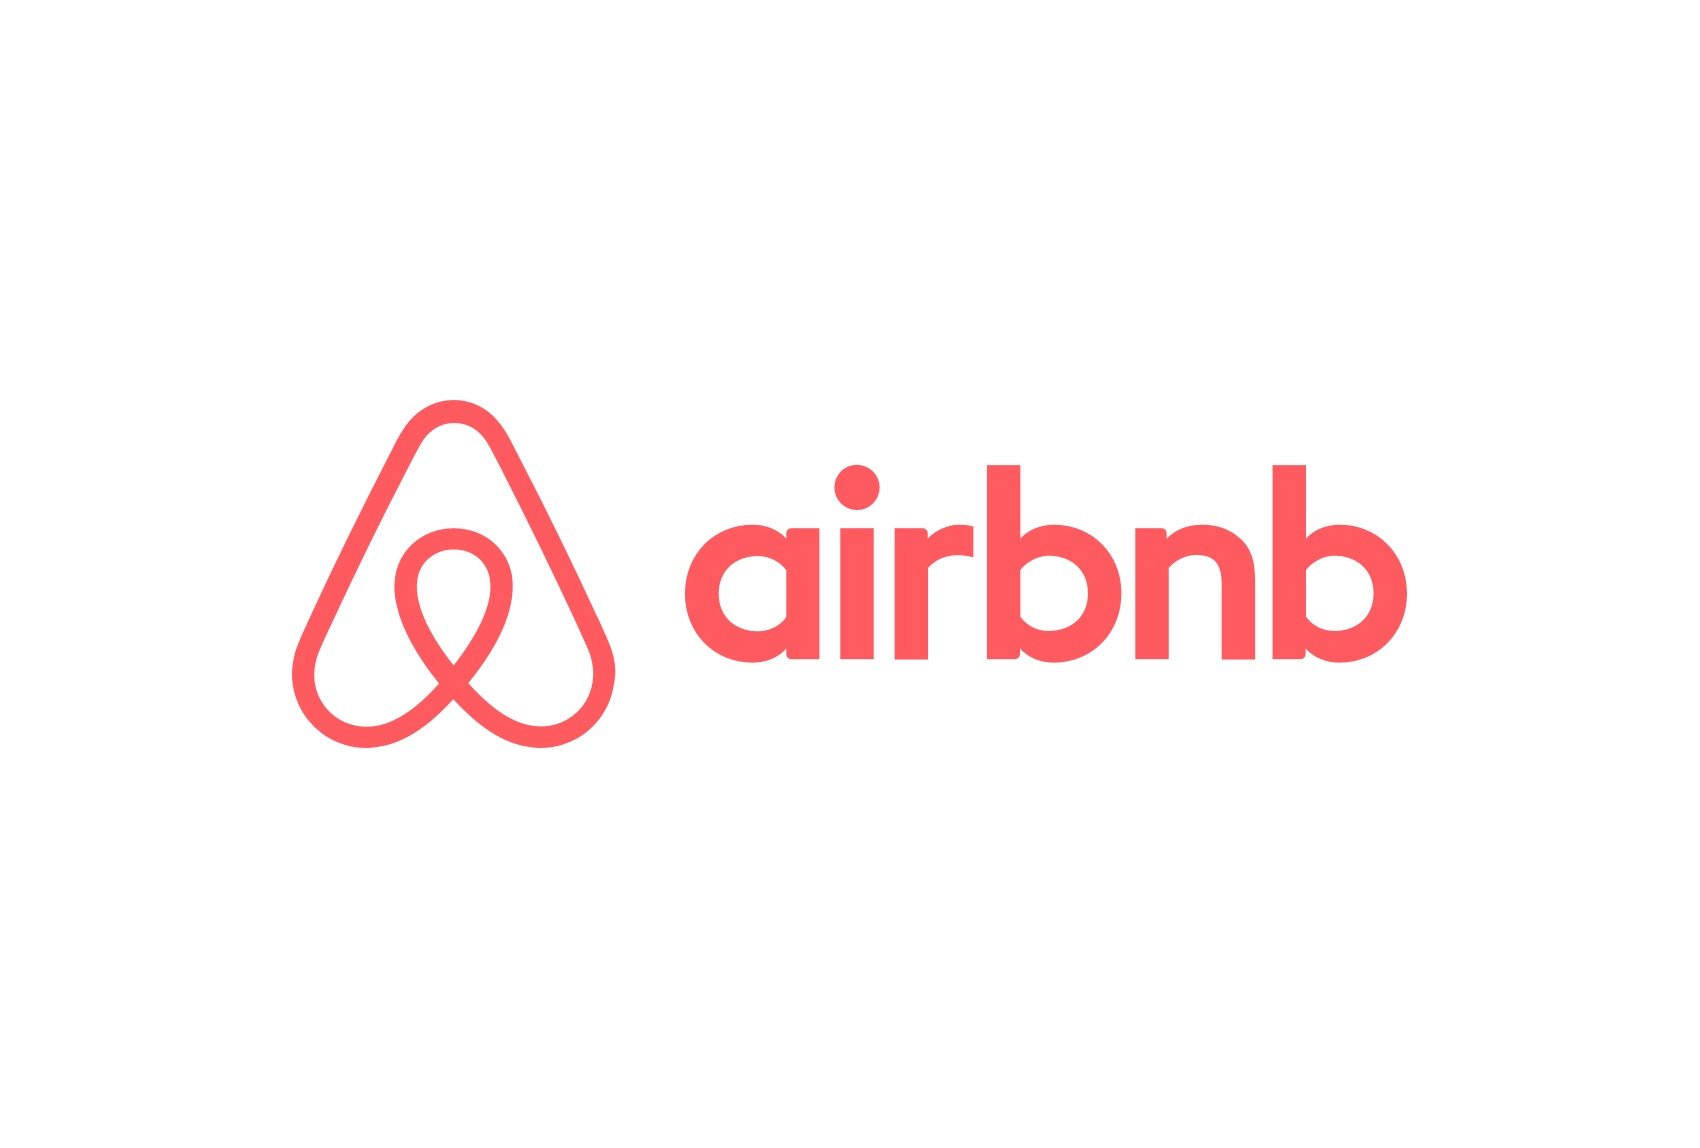 Airbnb monogram logo